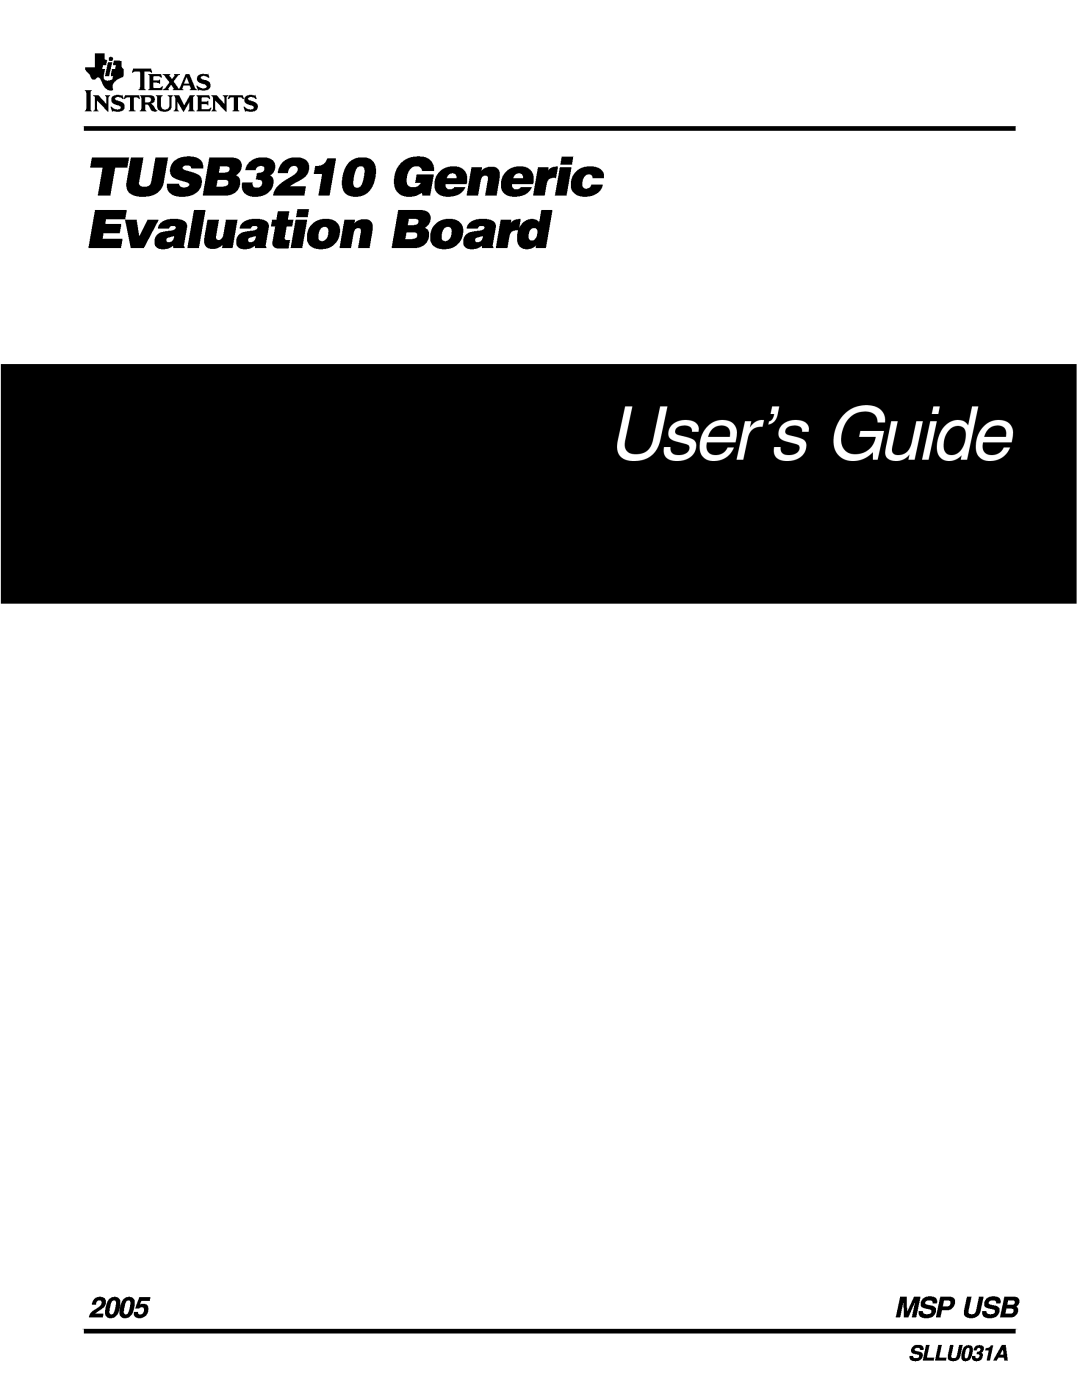 Texas Instruments manual User’s Guide, TUSB3210 Generic Evaluation Board, 2005, Msp Usb, SLLU031A 